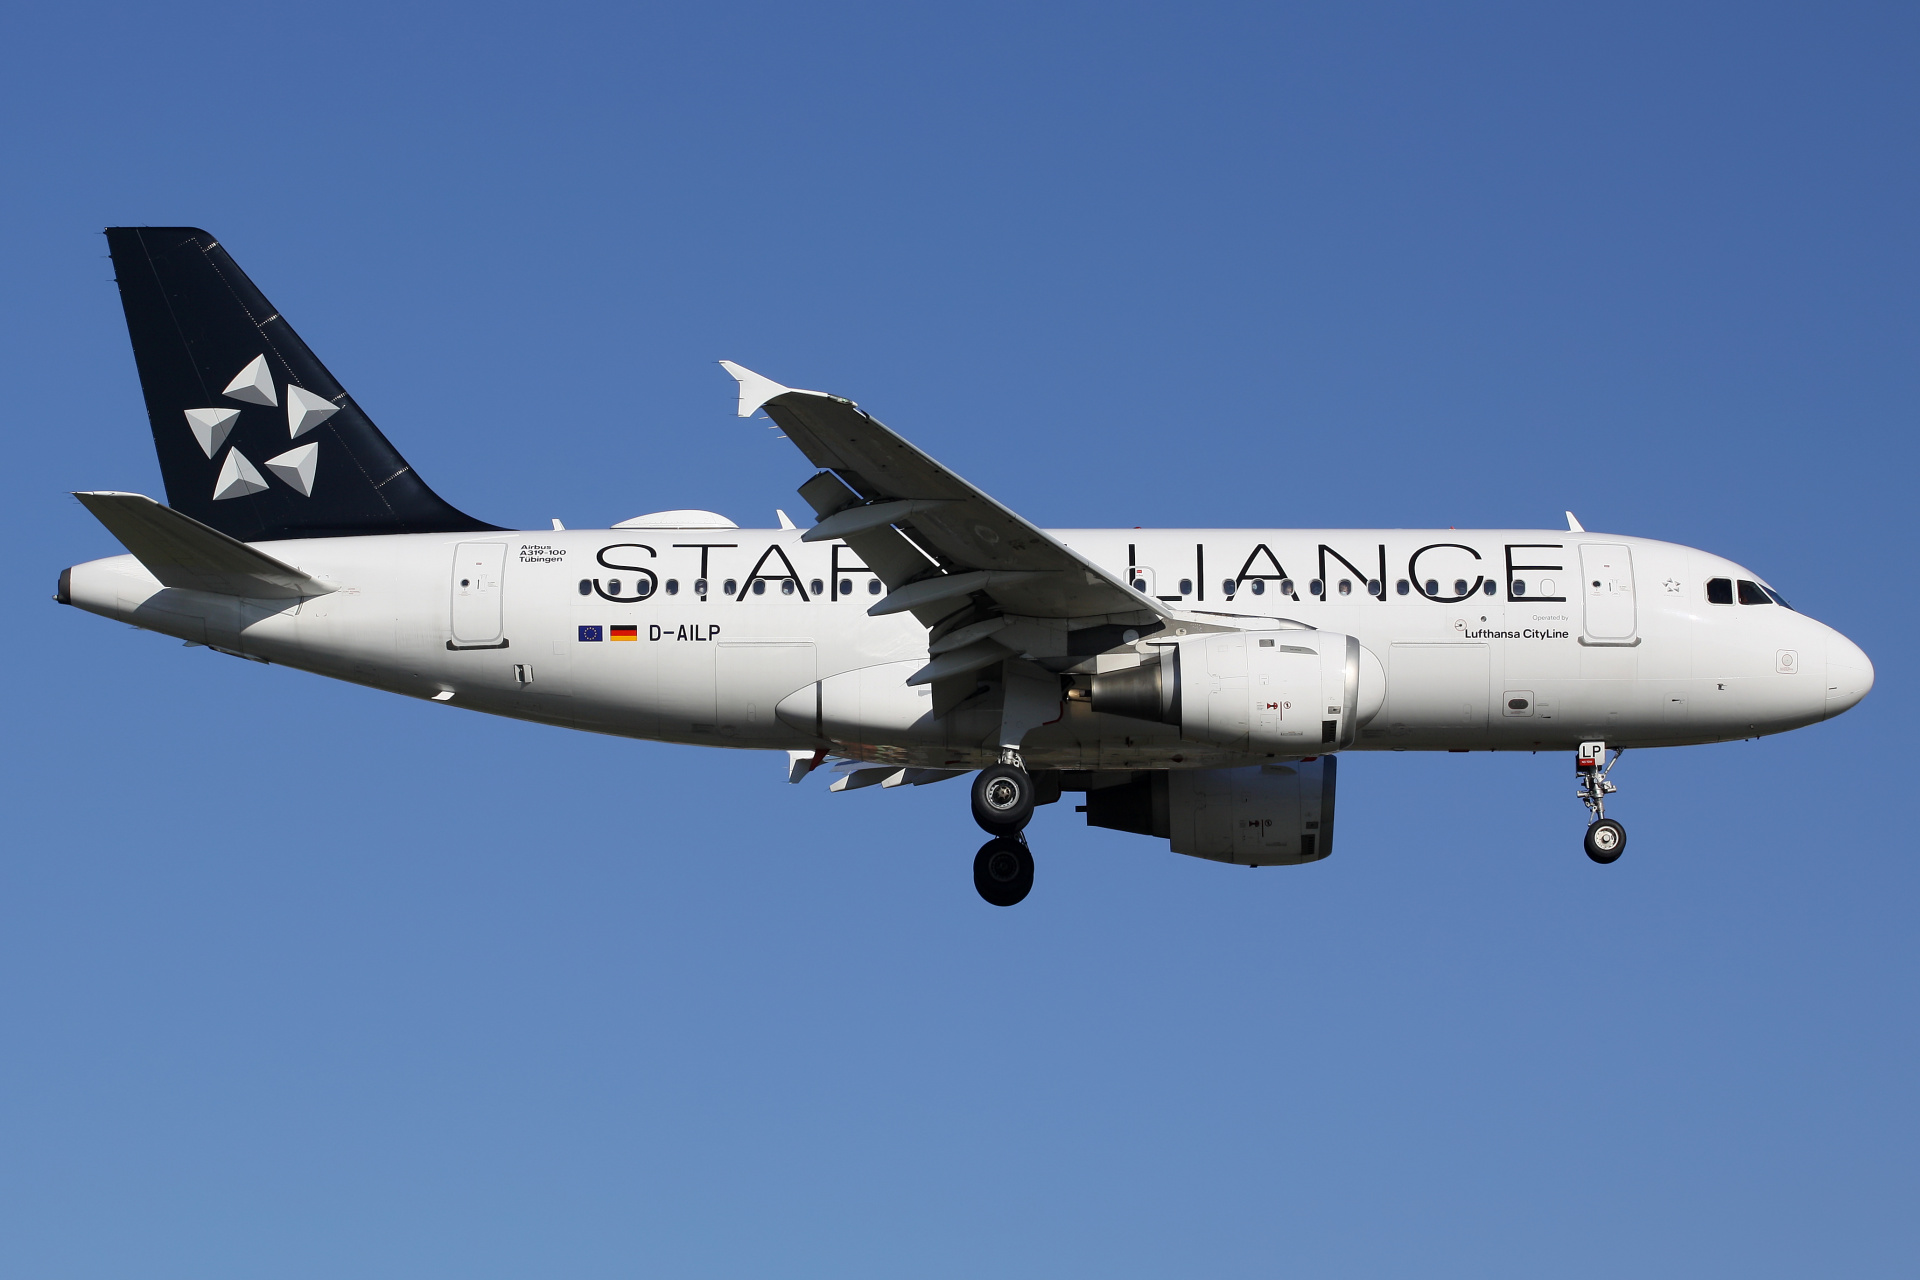 D-AILP, Lufthansa CityLine (Star Alliance livery) (Aircraft » EPWA Spotting » Airbus A319-100 » Lufthansa)